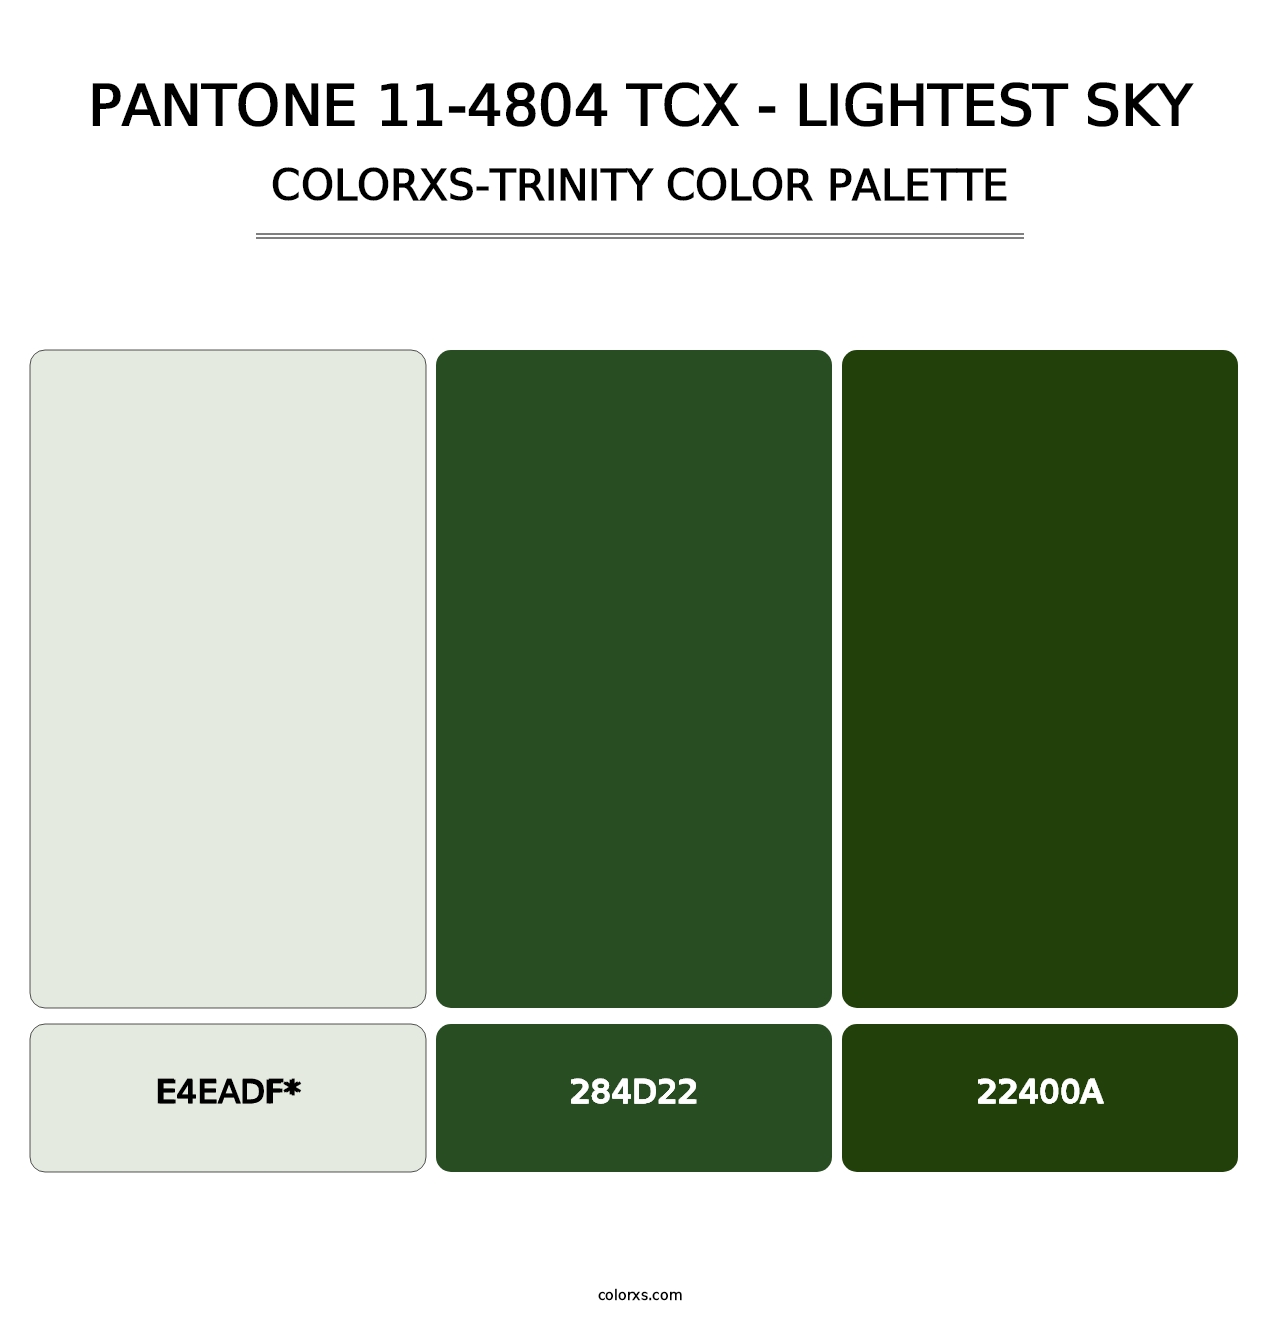 PANTONE 11-4804 TCX - Lightest Sky - Colorxs Trinity Palette